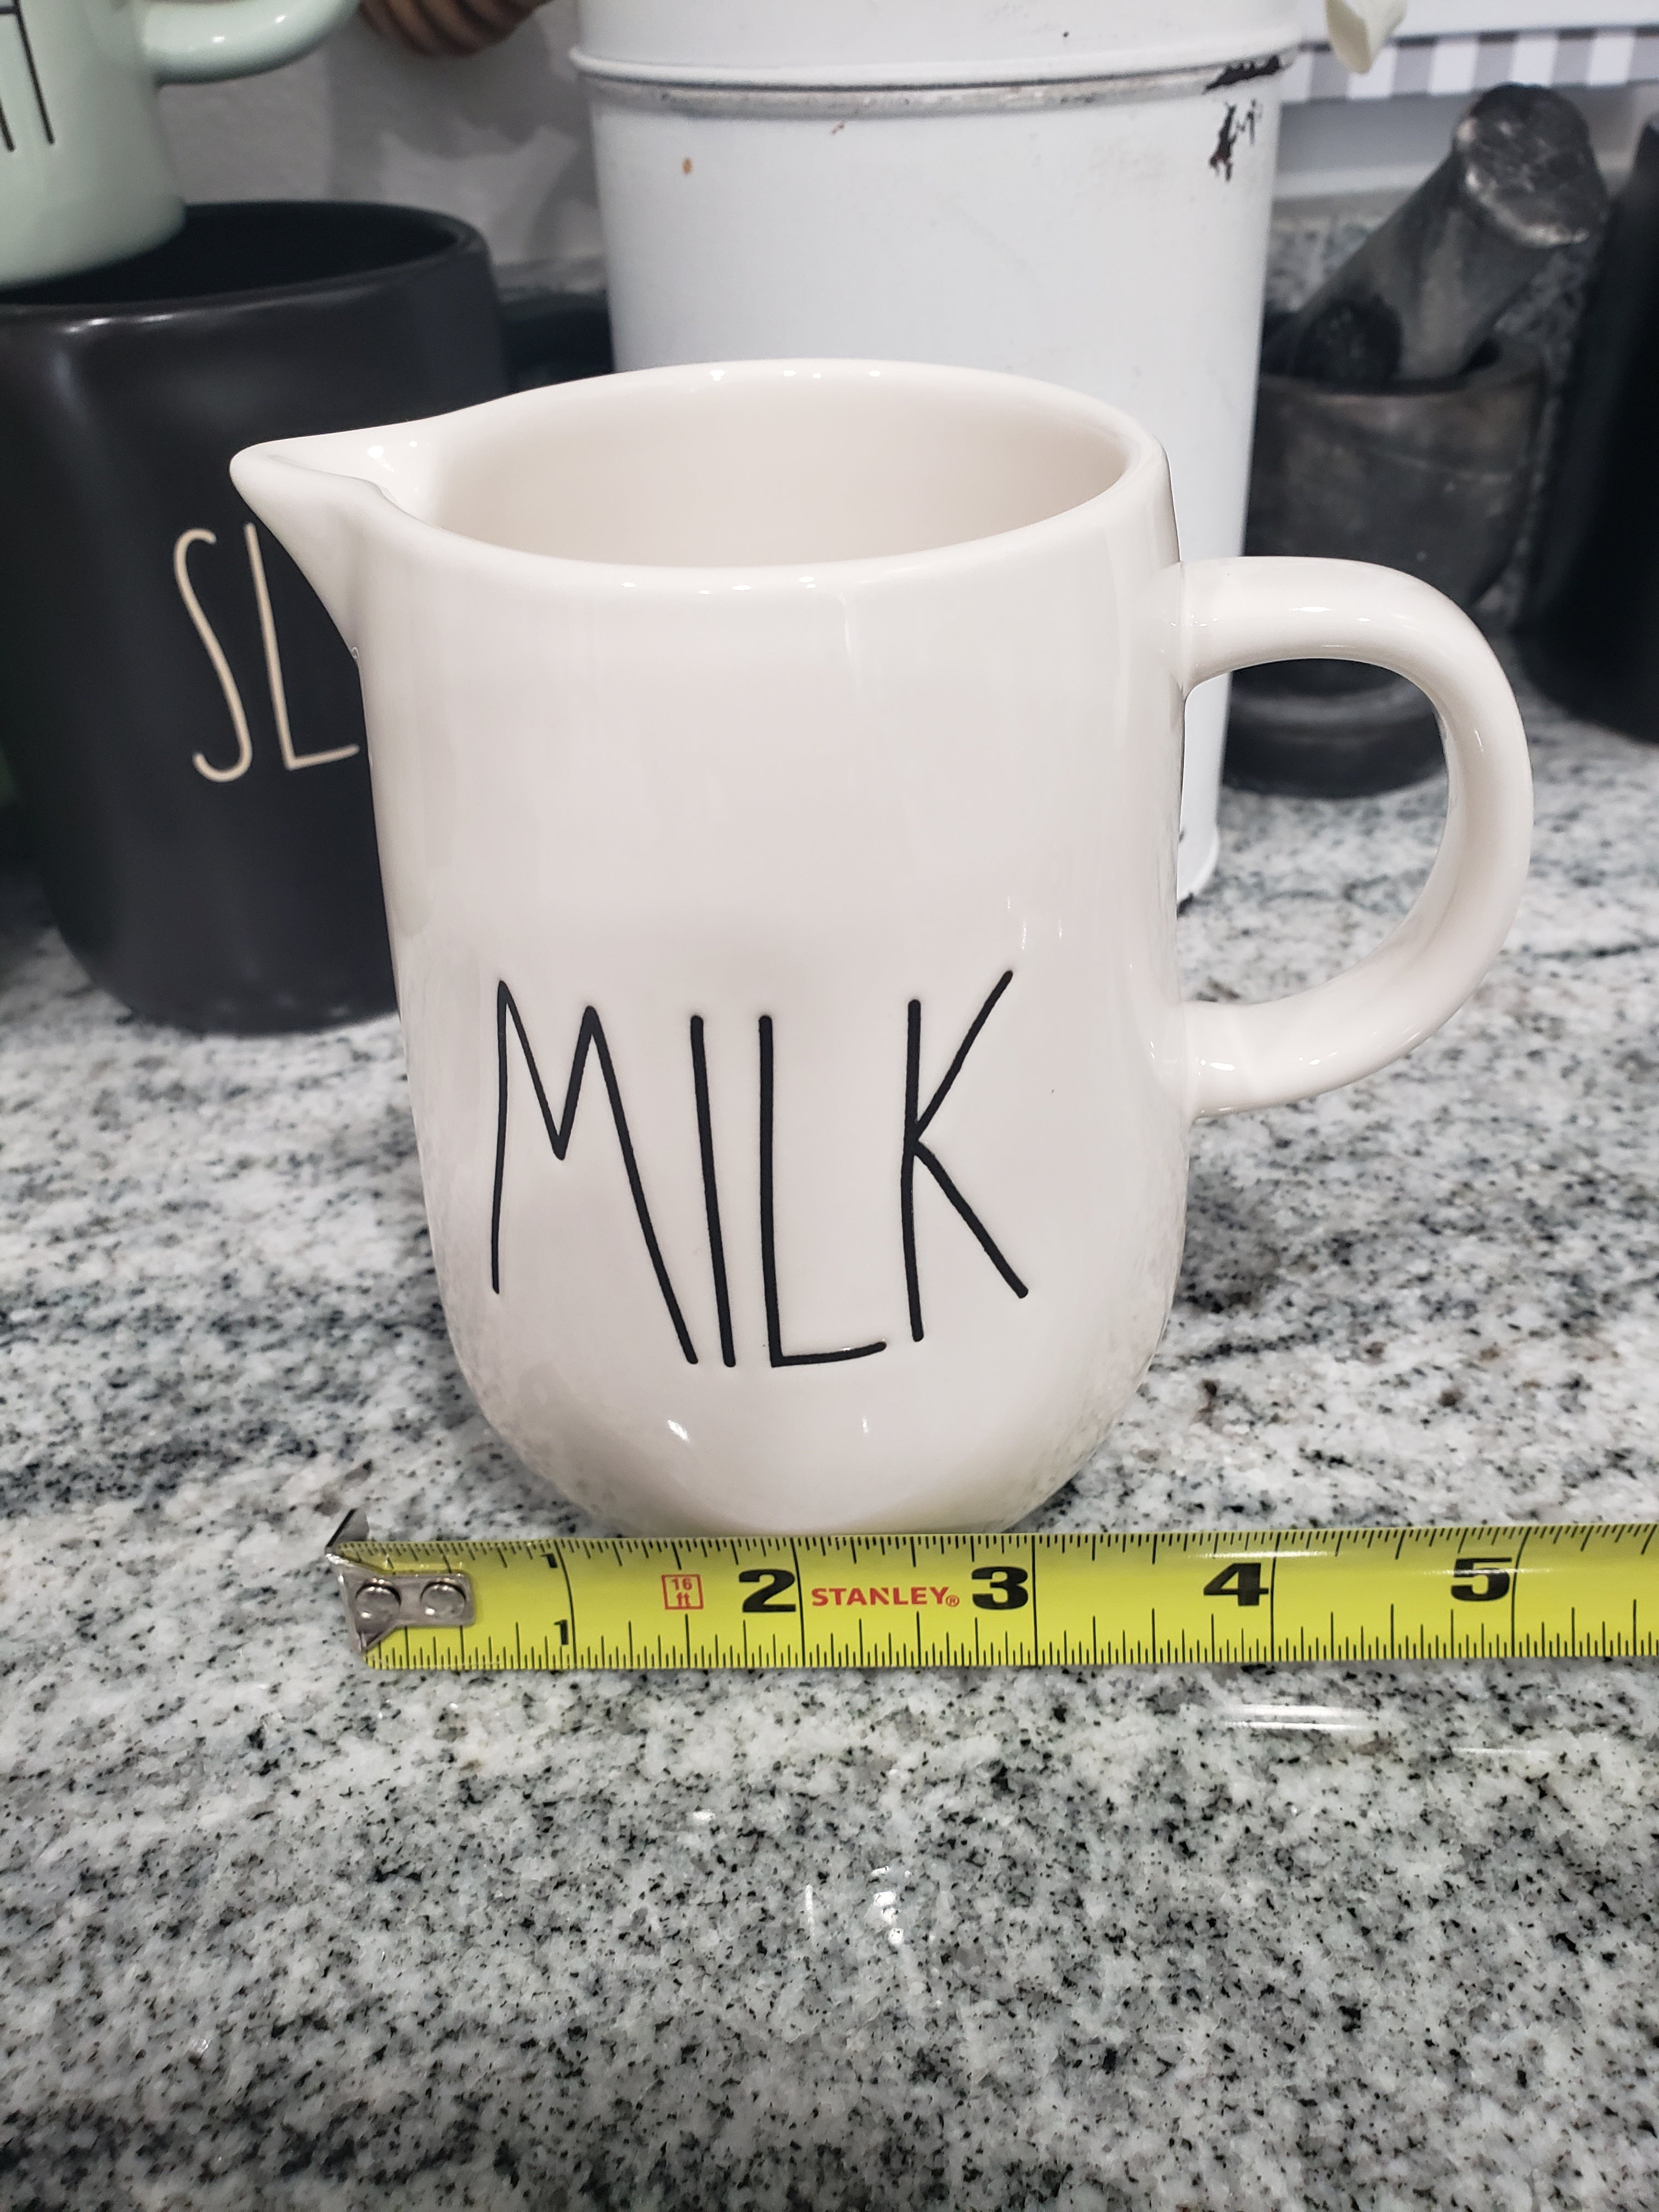 Rae Dunn Measuring Cups With Tea Pot Handles Farm House Collection